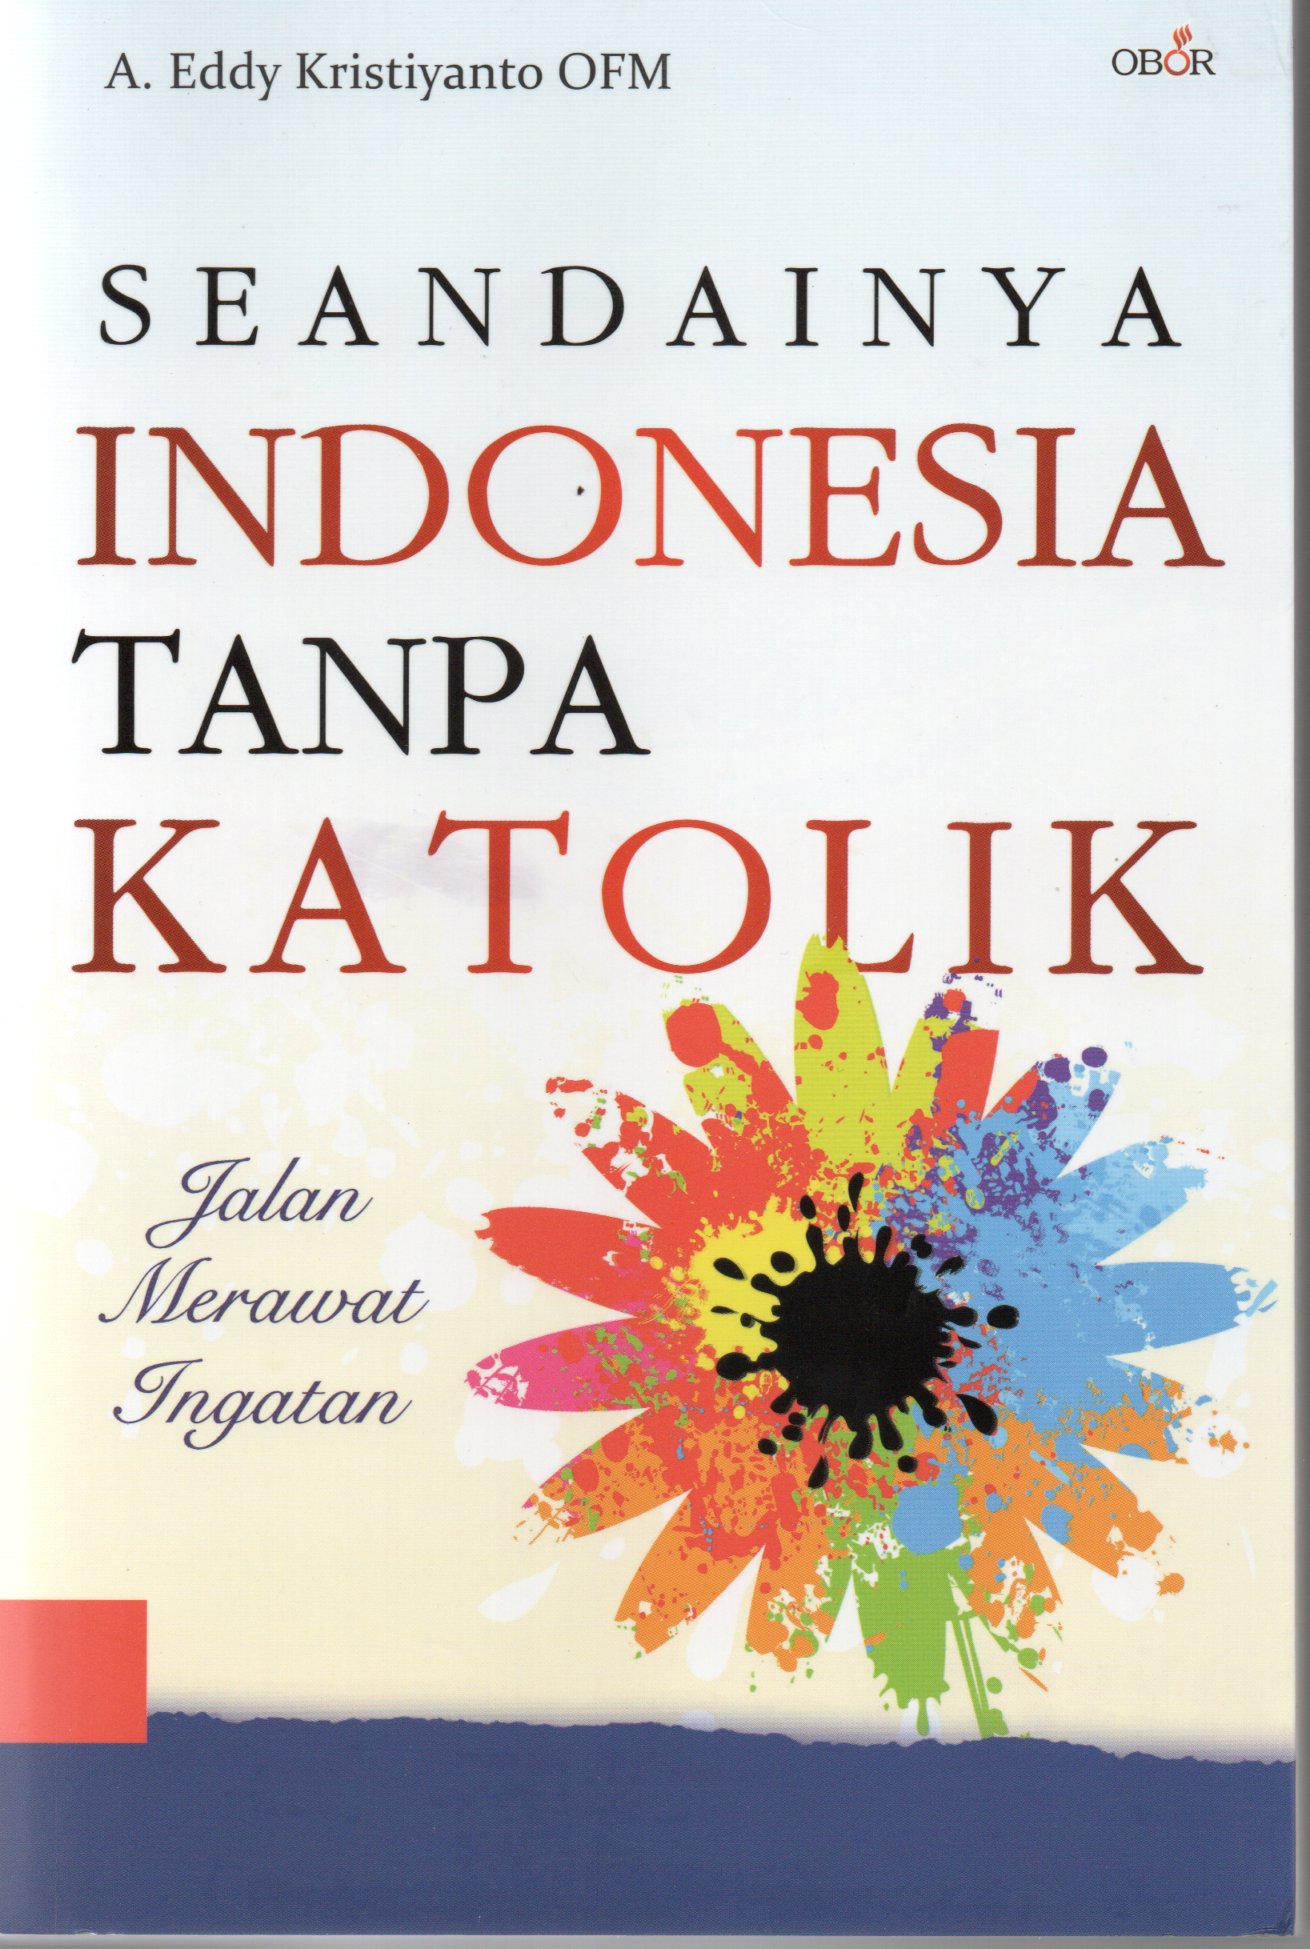 Seandainya Indonesia tanpa Katolik/A. Eddy Kristiyanto OFM